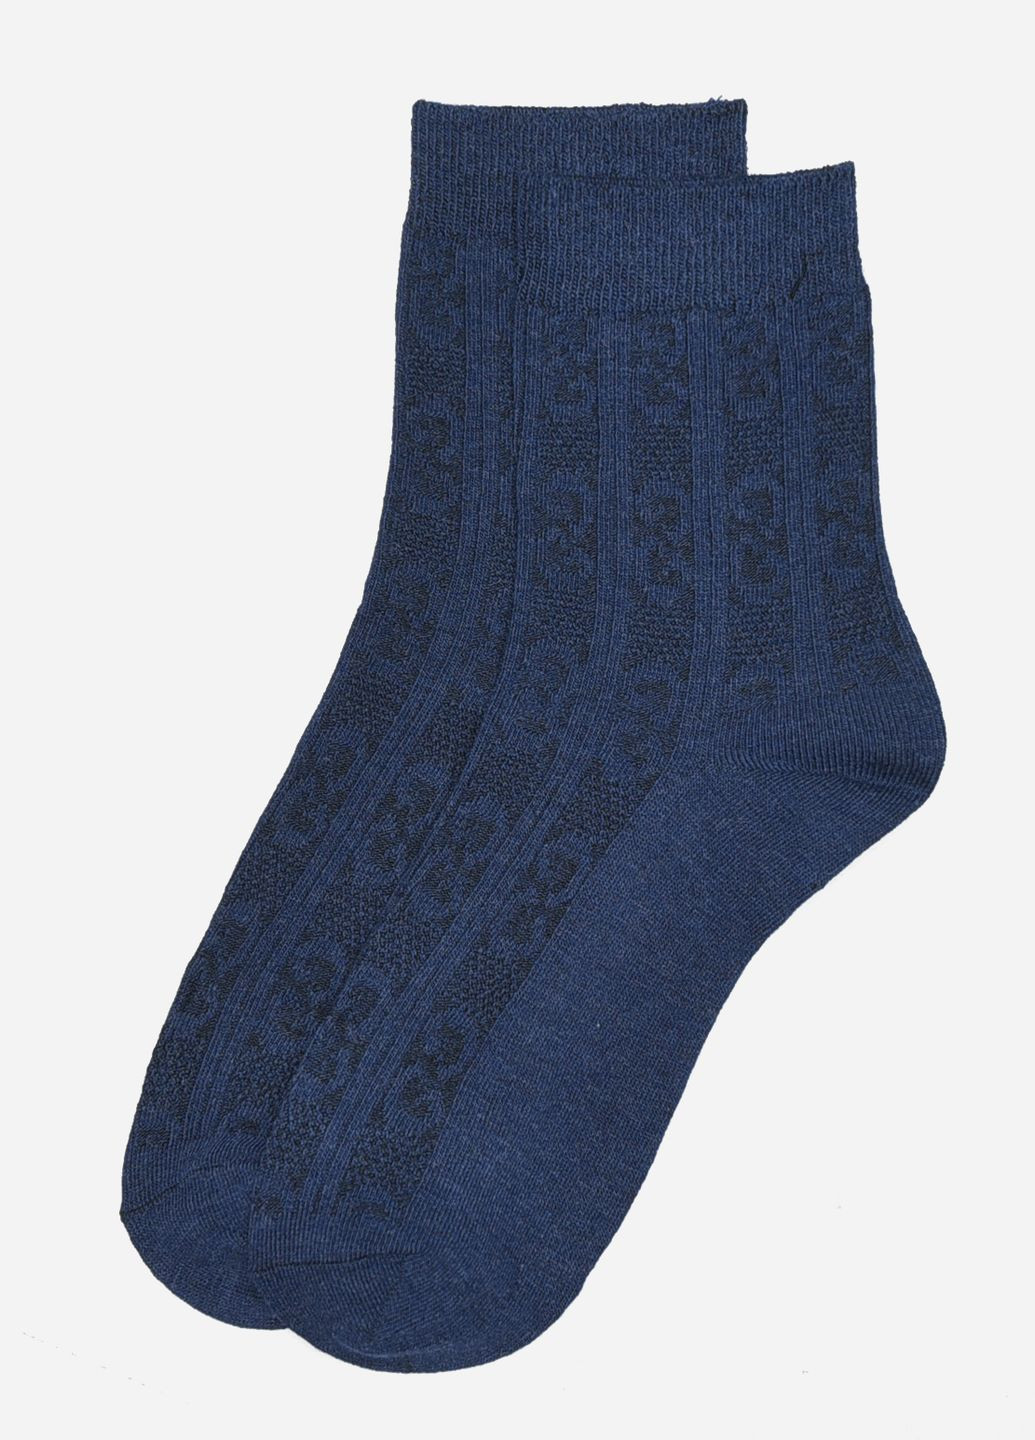 Носки мужские темно-синего цвета размер 41-47 Let's Shop (260736394)